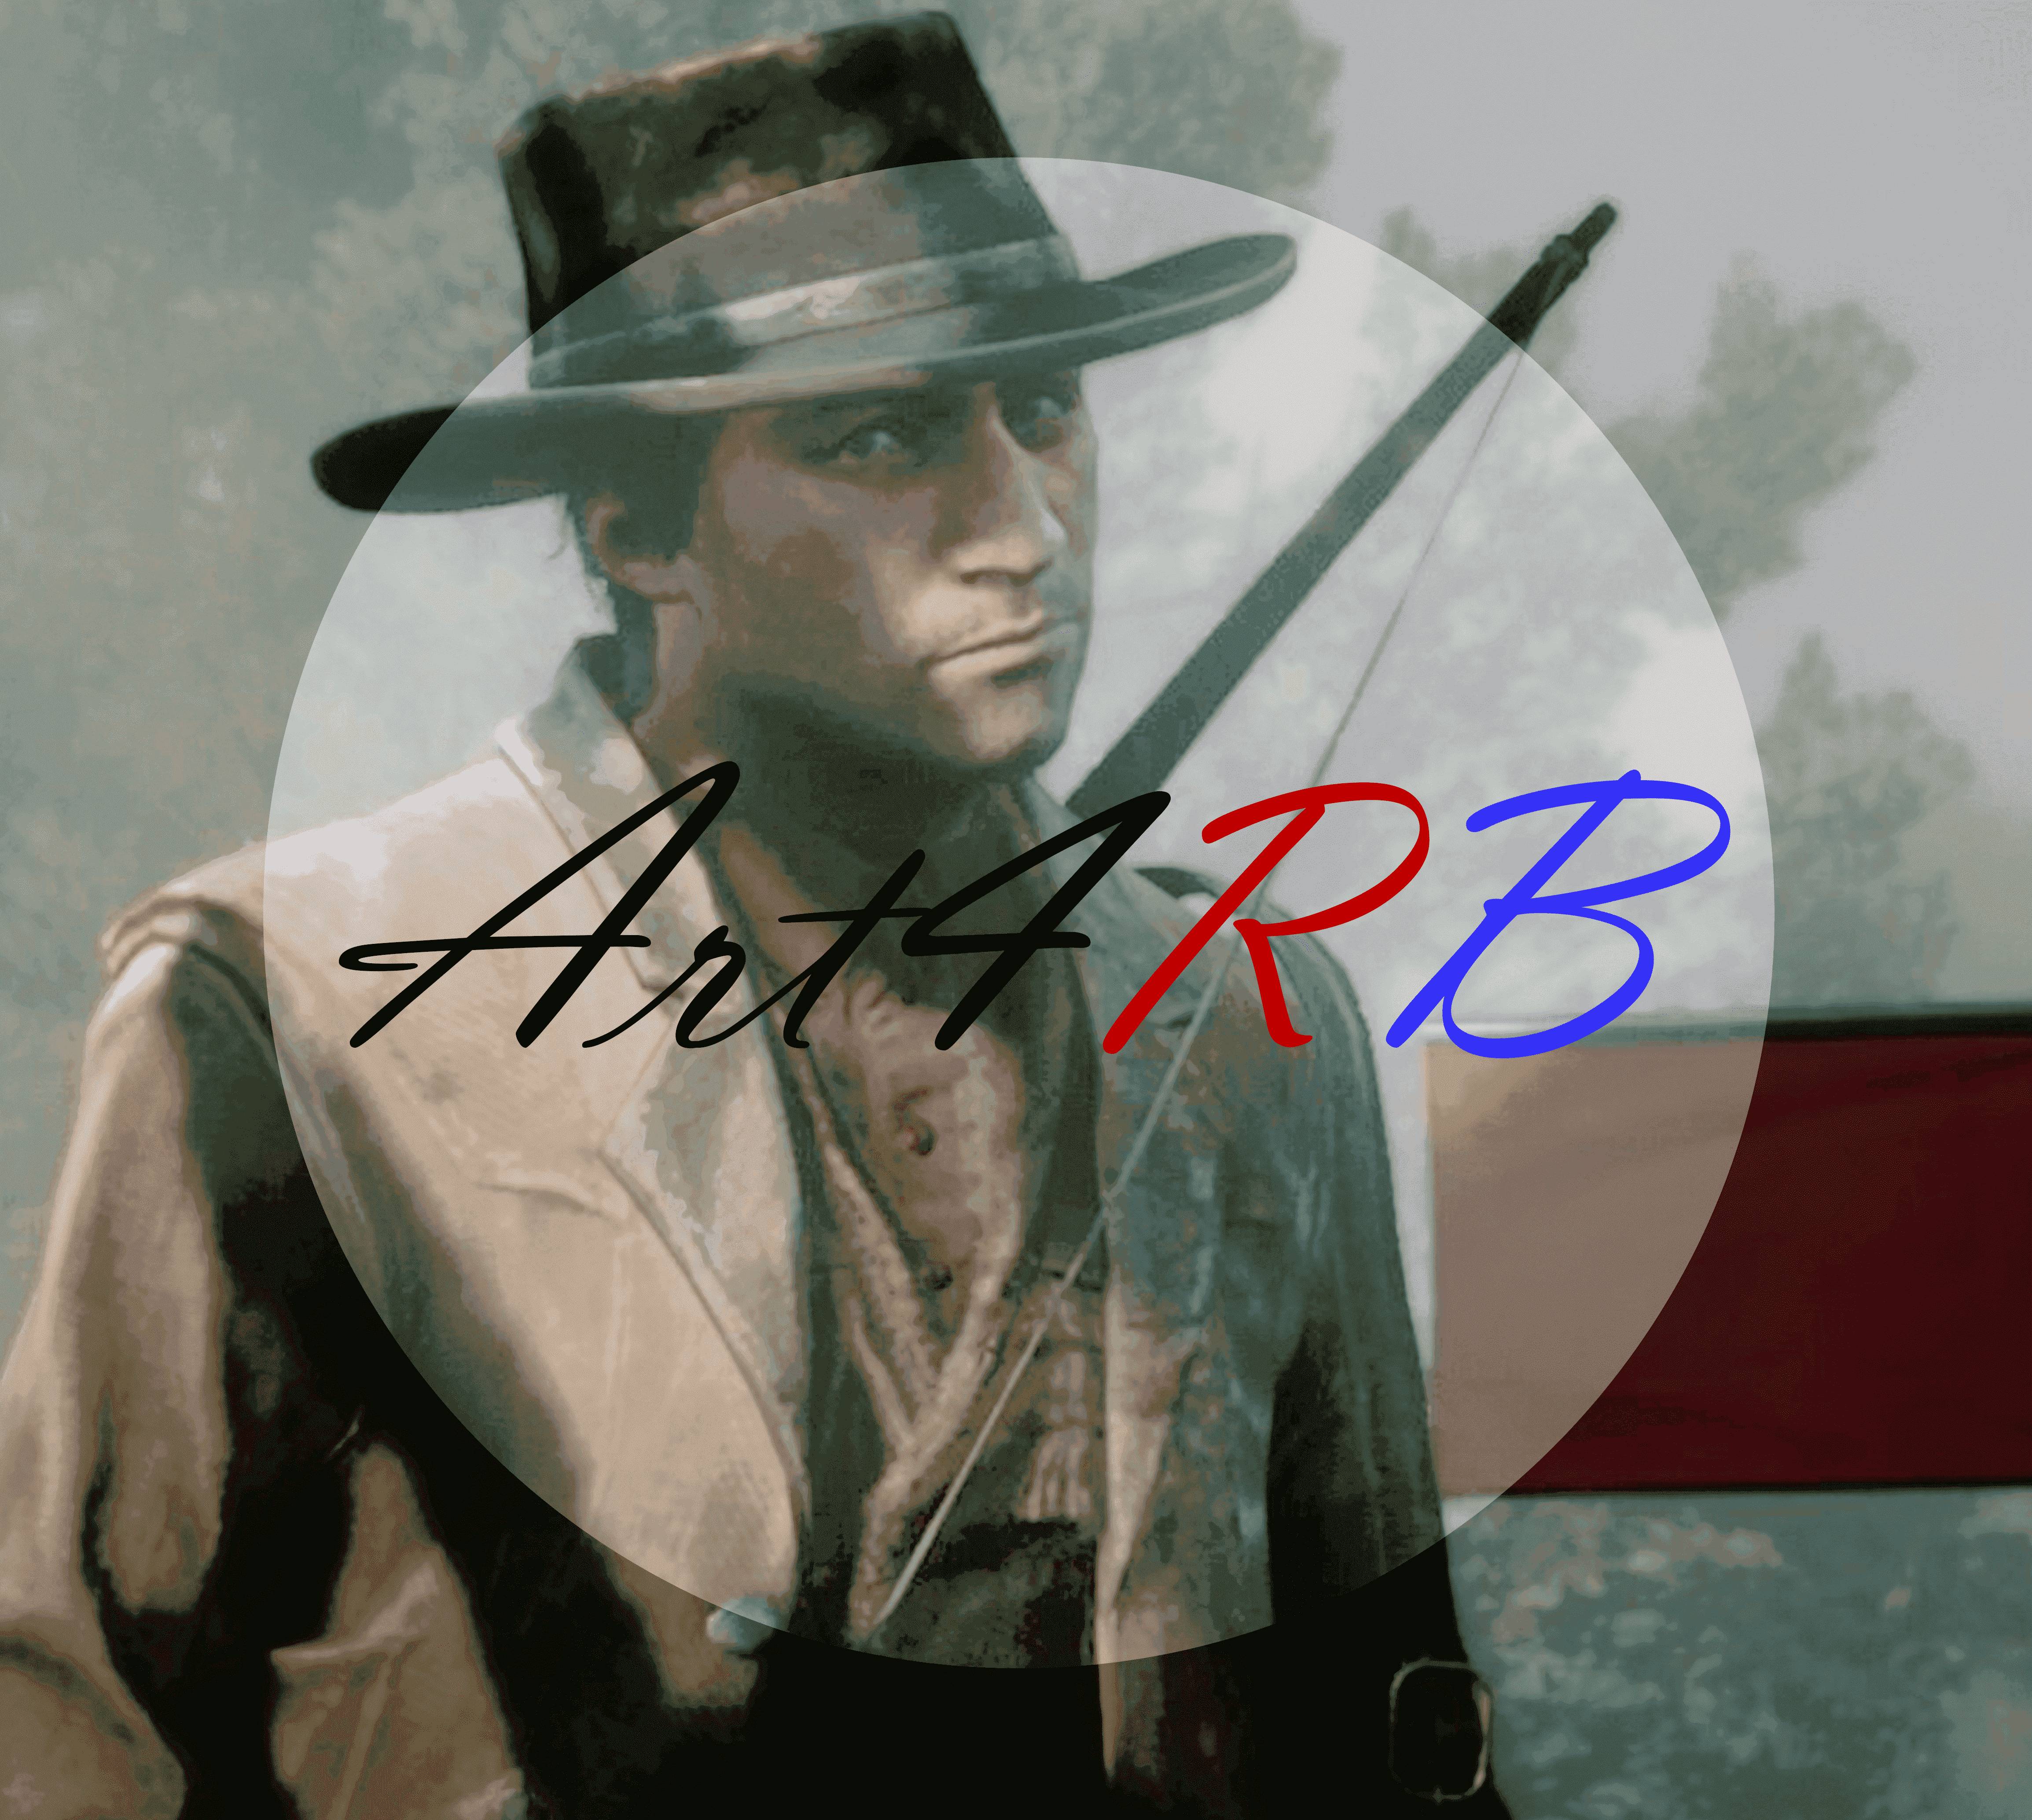 ART|4.R.B logo